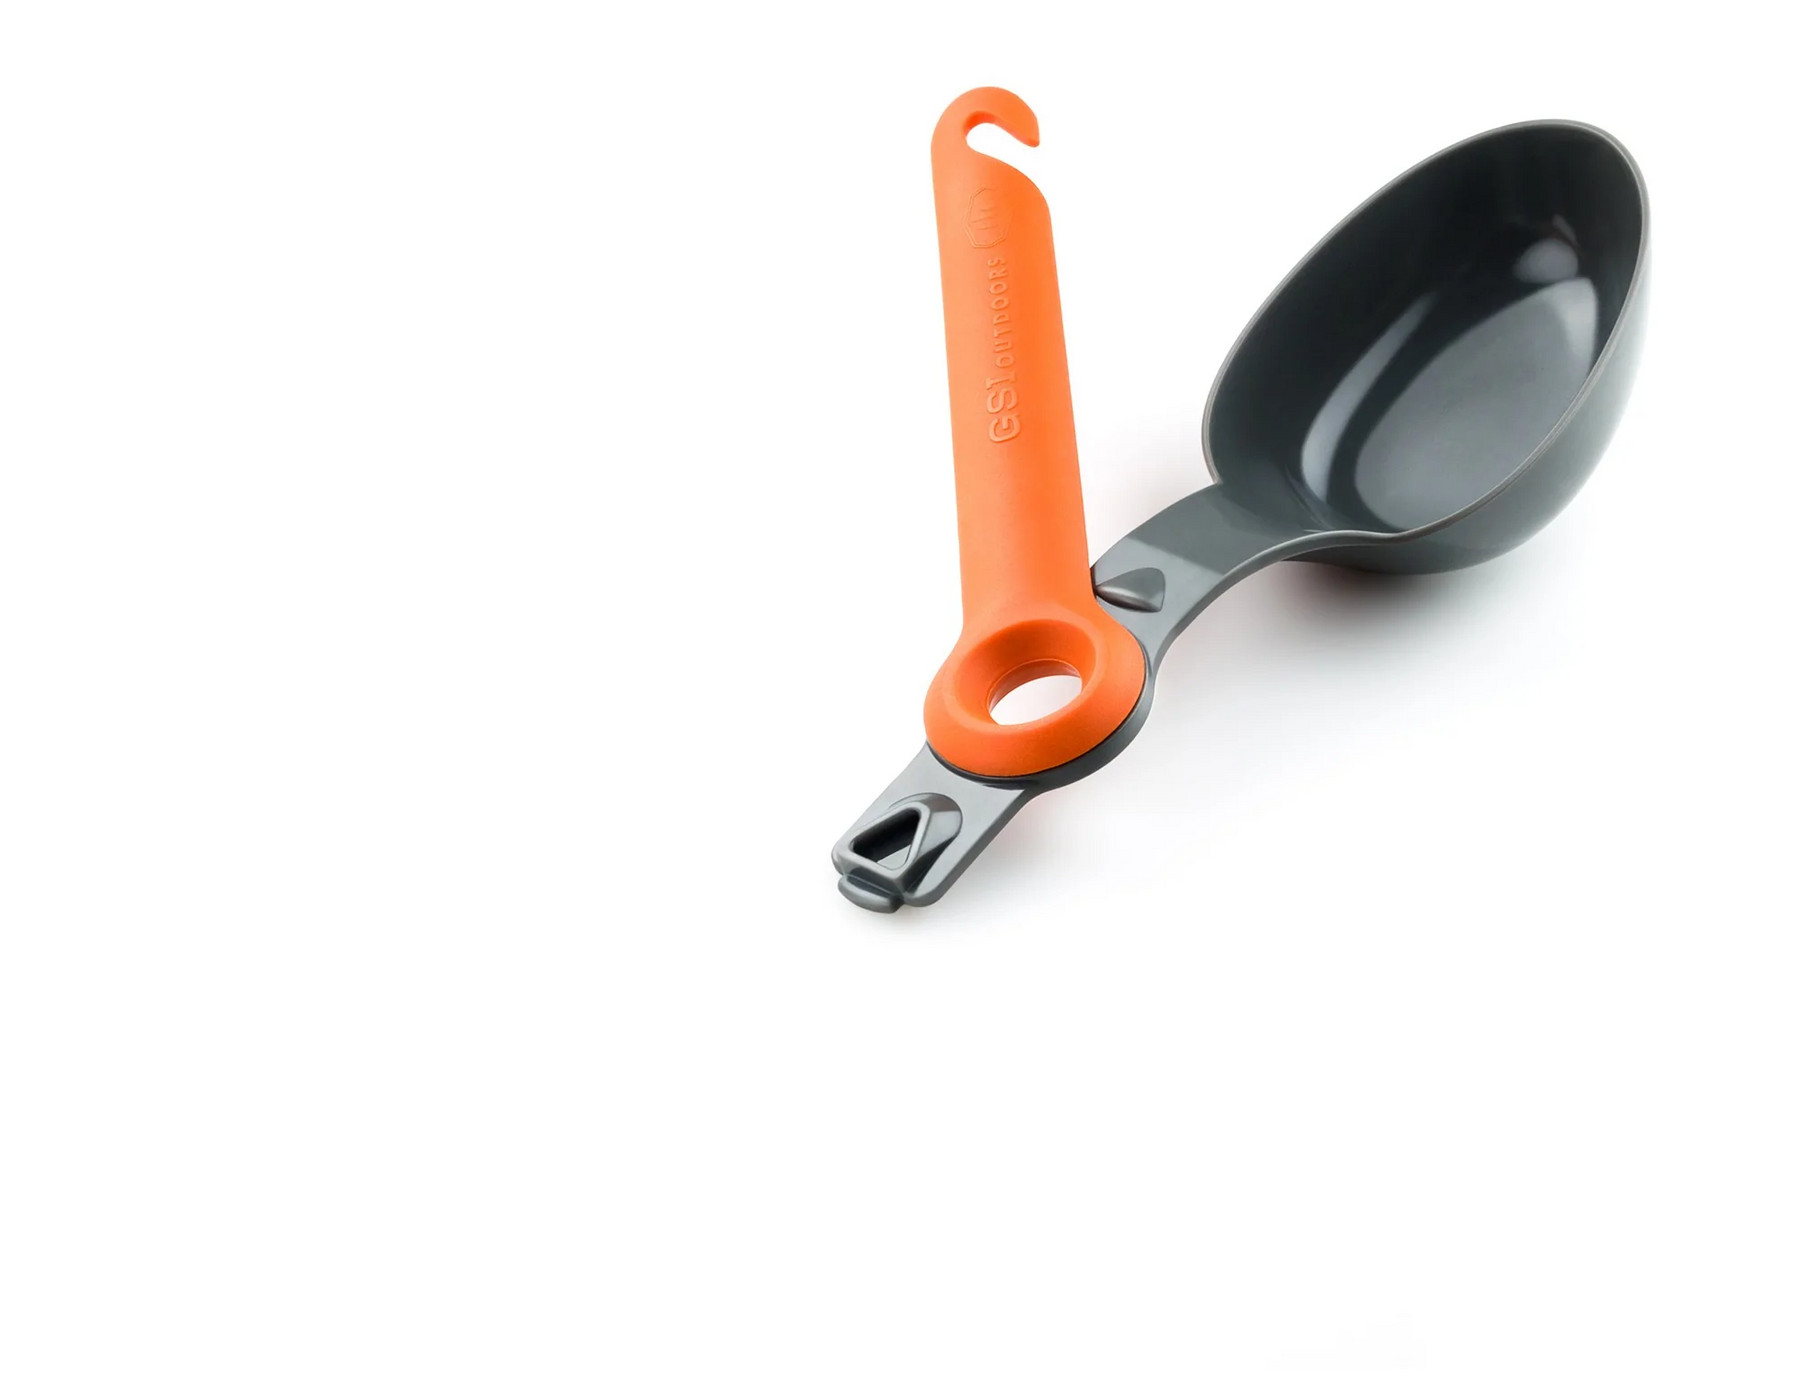 GSI Pivot Spoon 旋轉摺合式湯勺